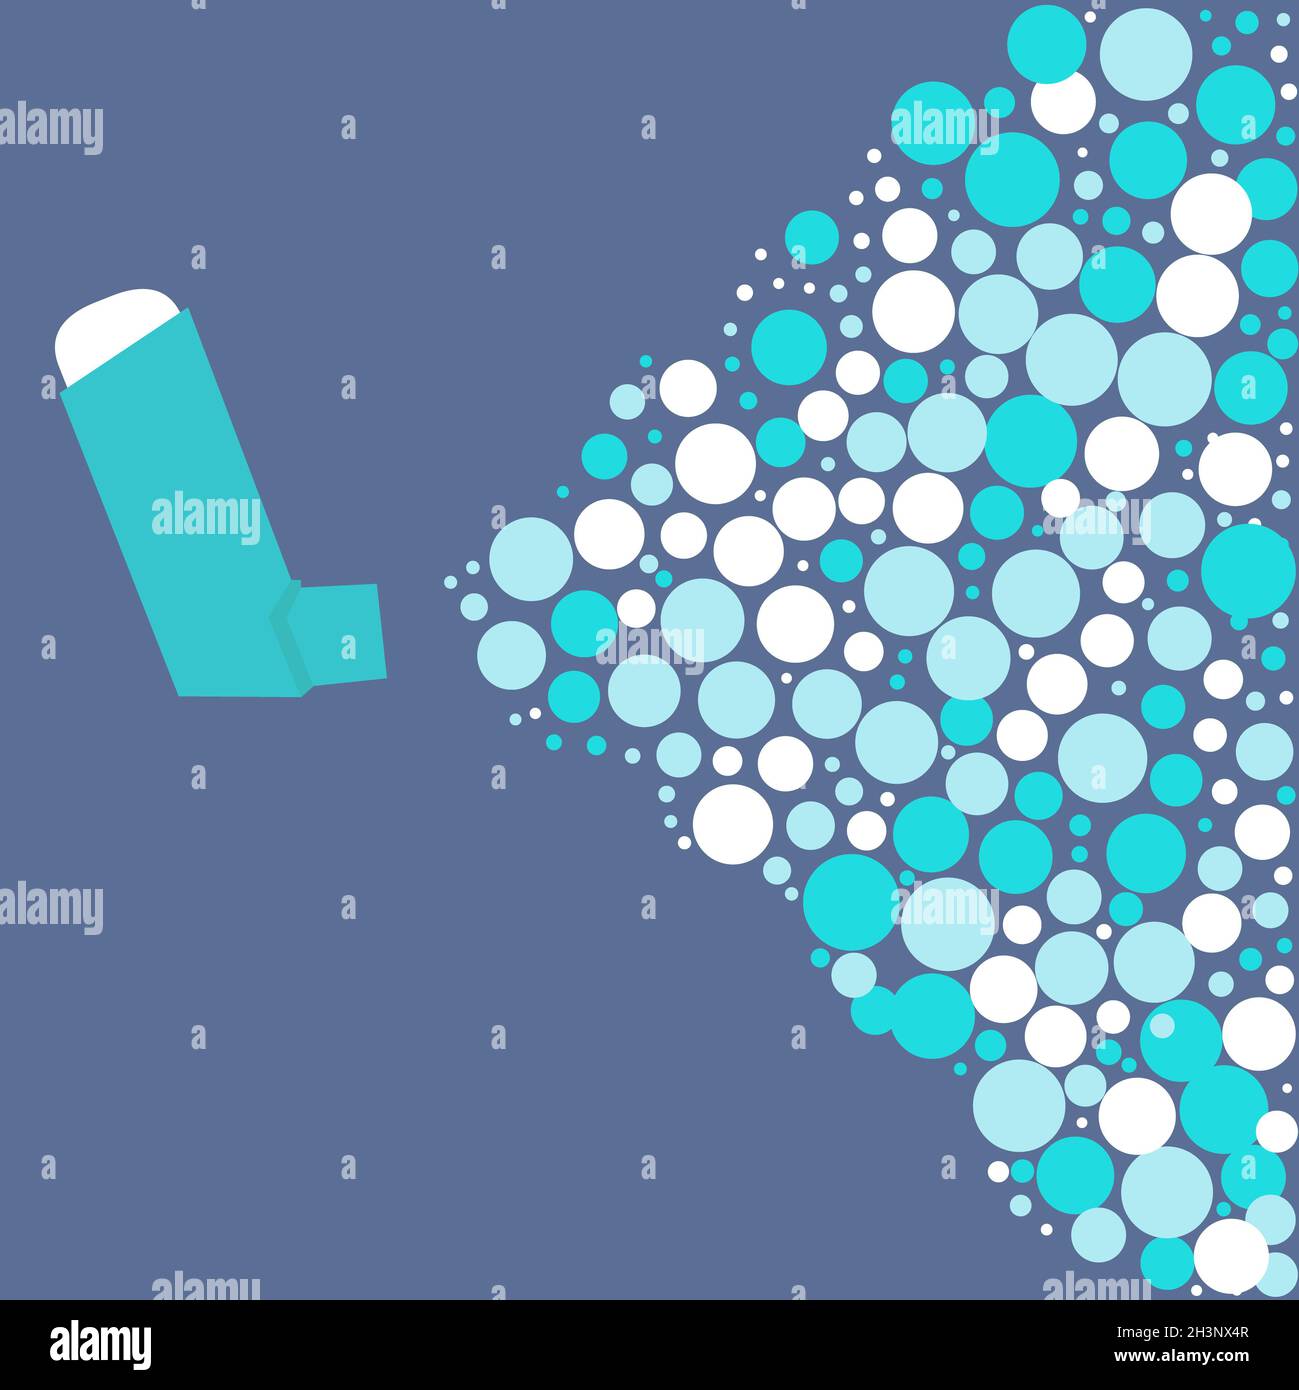 Asthma awareness, conceptual illustration Stock Photo